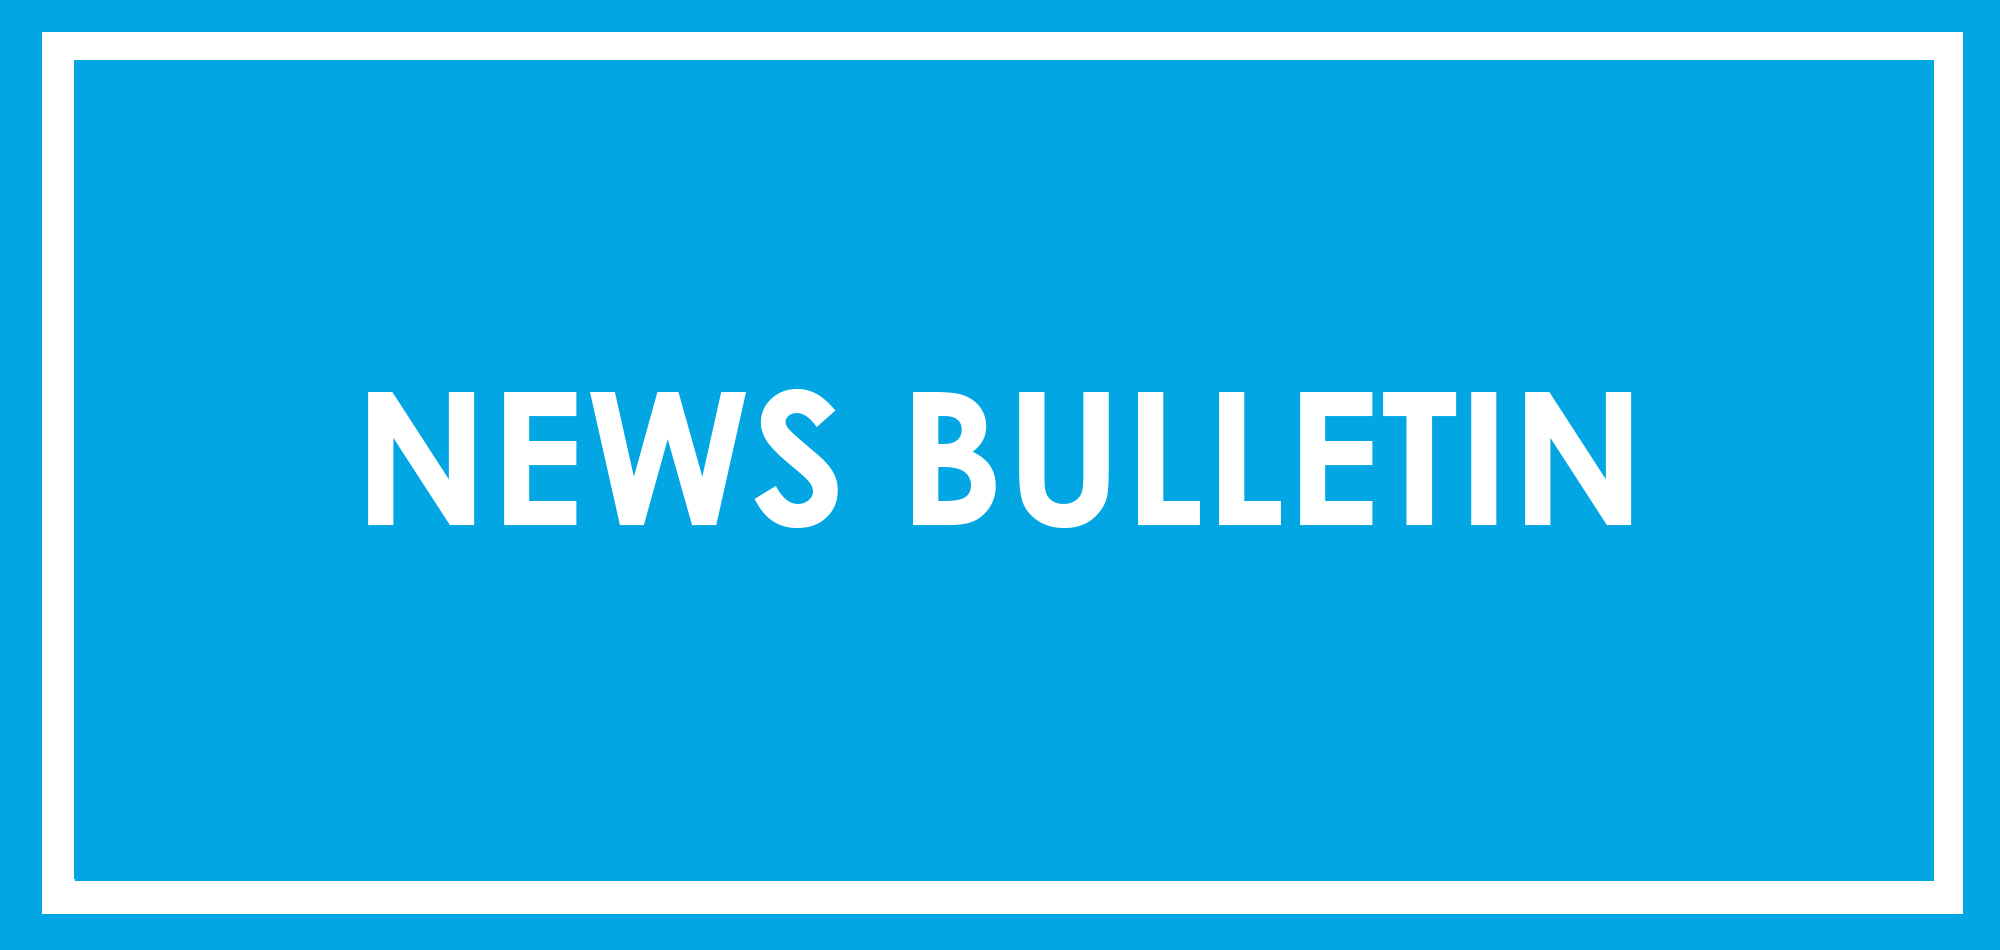 News Bulletin - 02.08.21